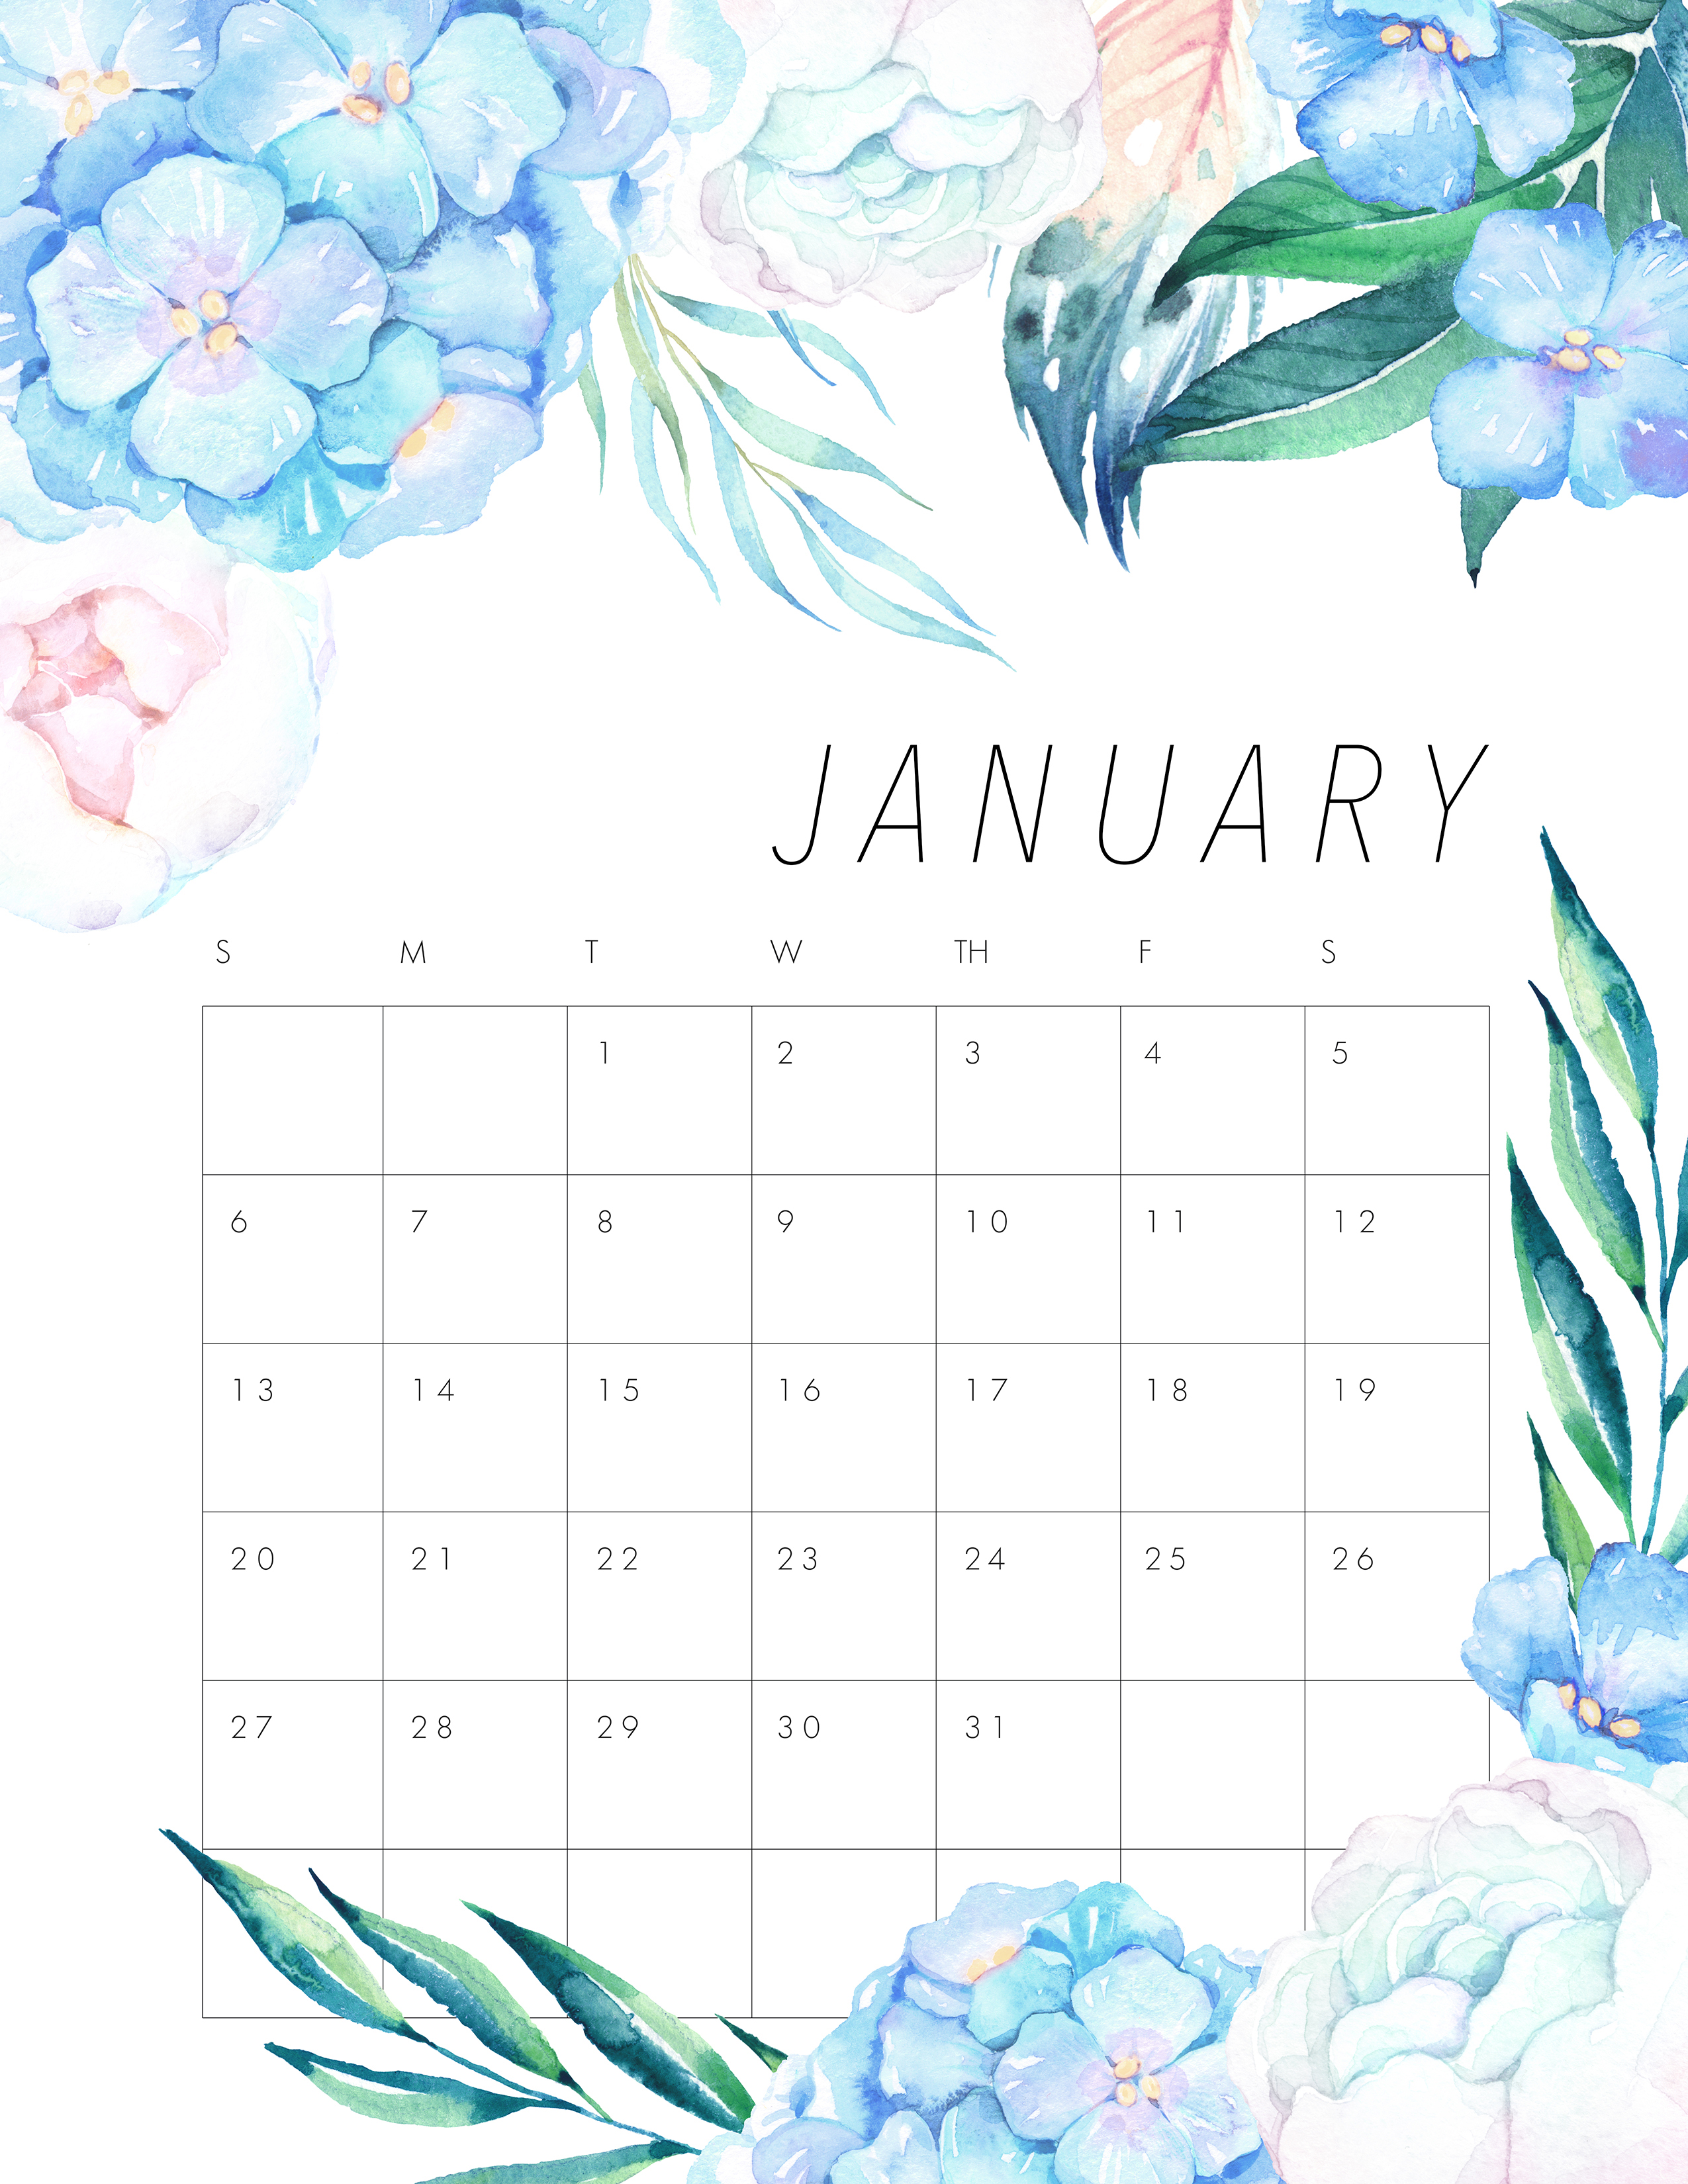 Image result for january 2019 calendar